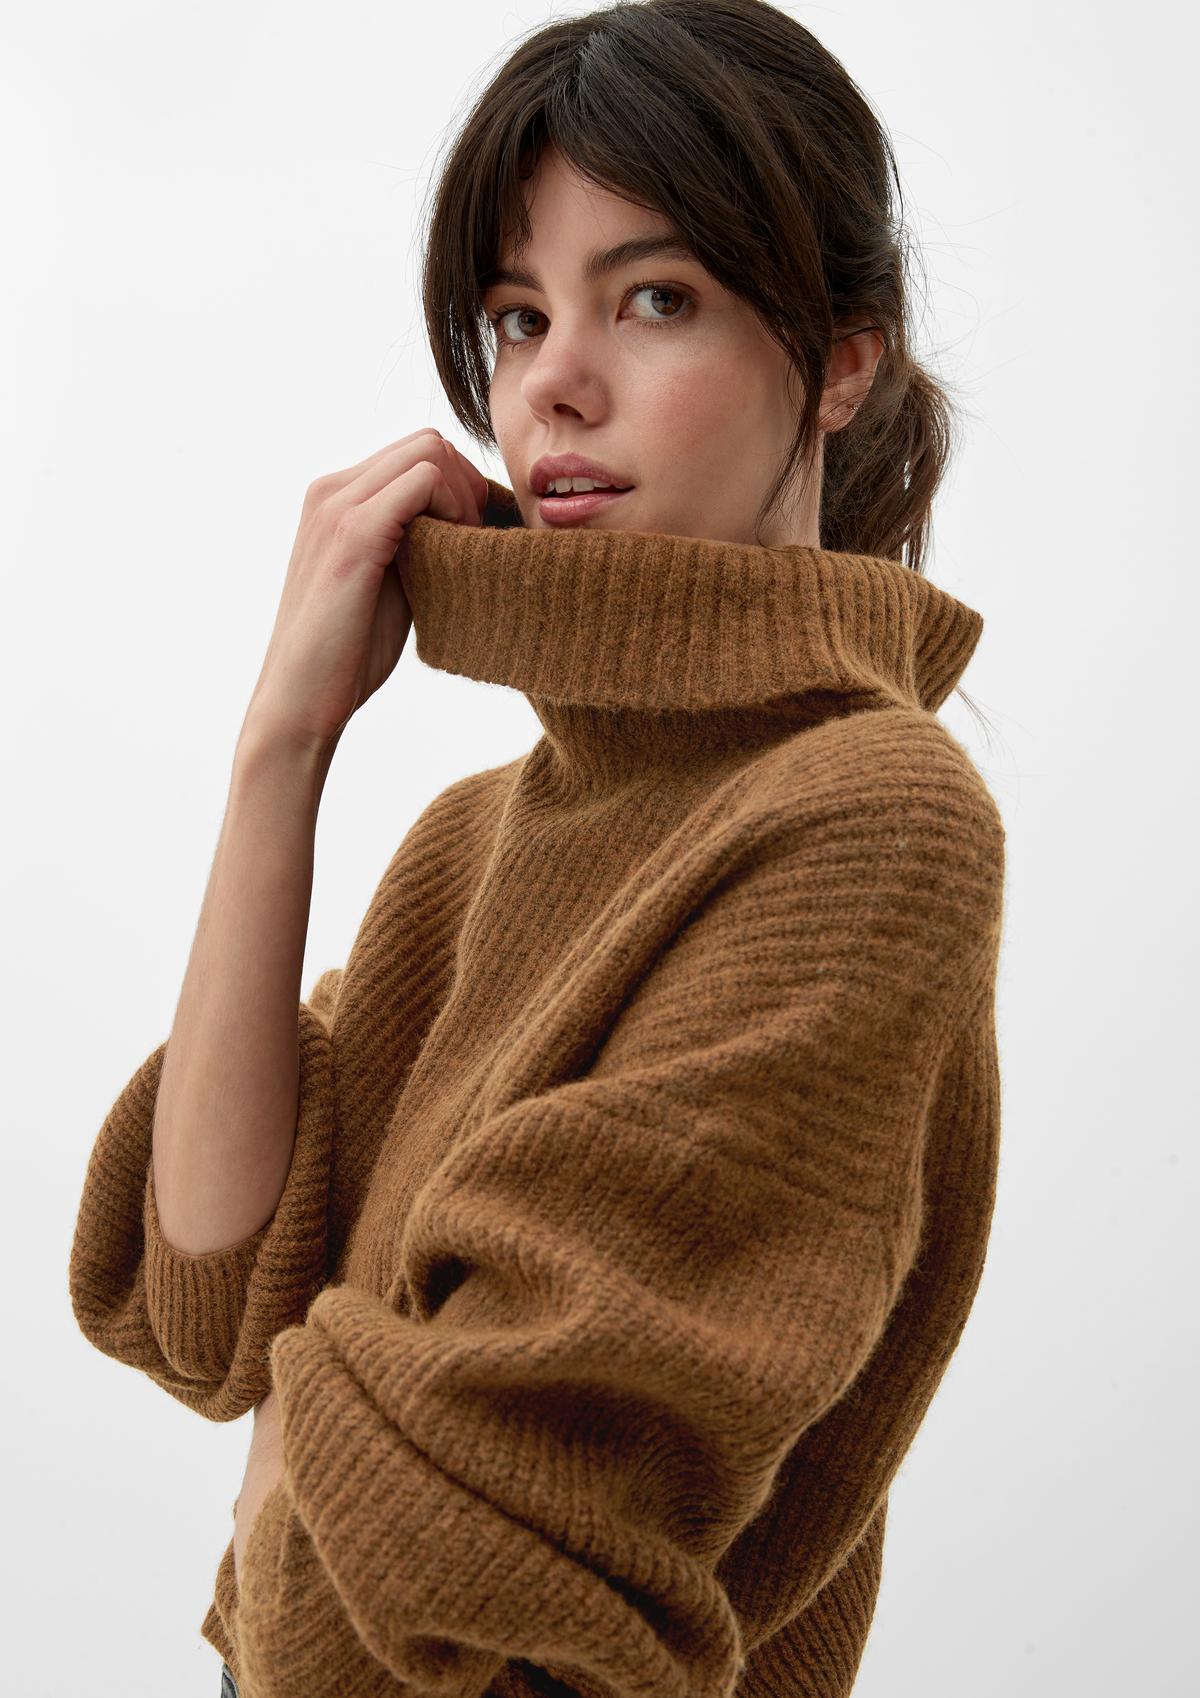 s.Oliver Knitted wool blend jumper